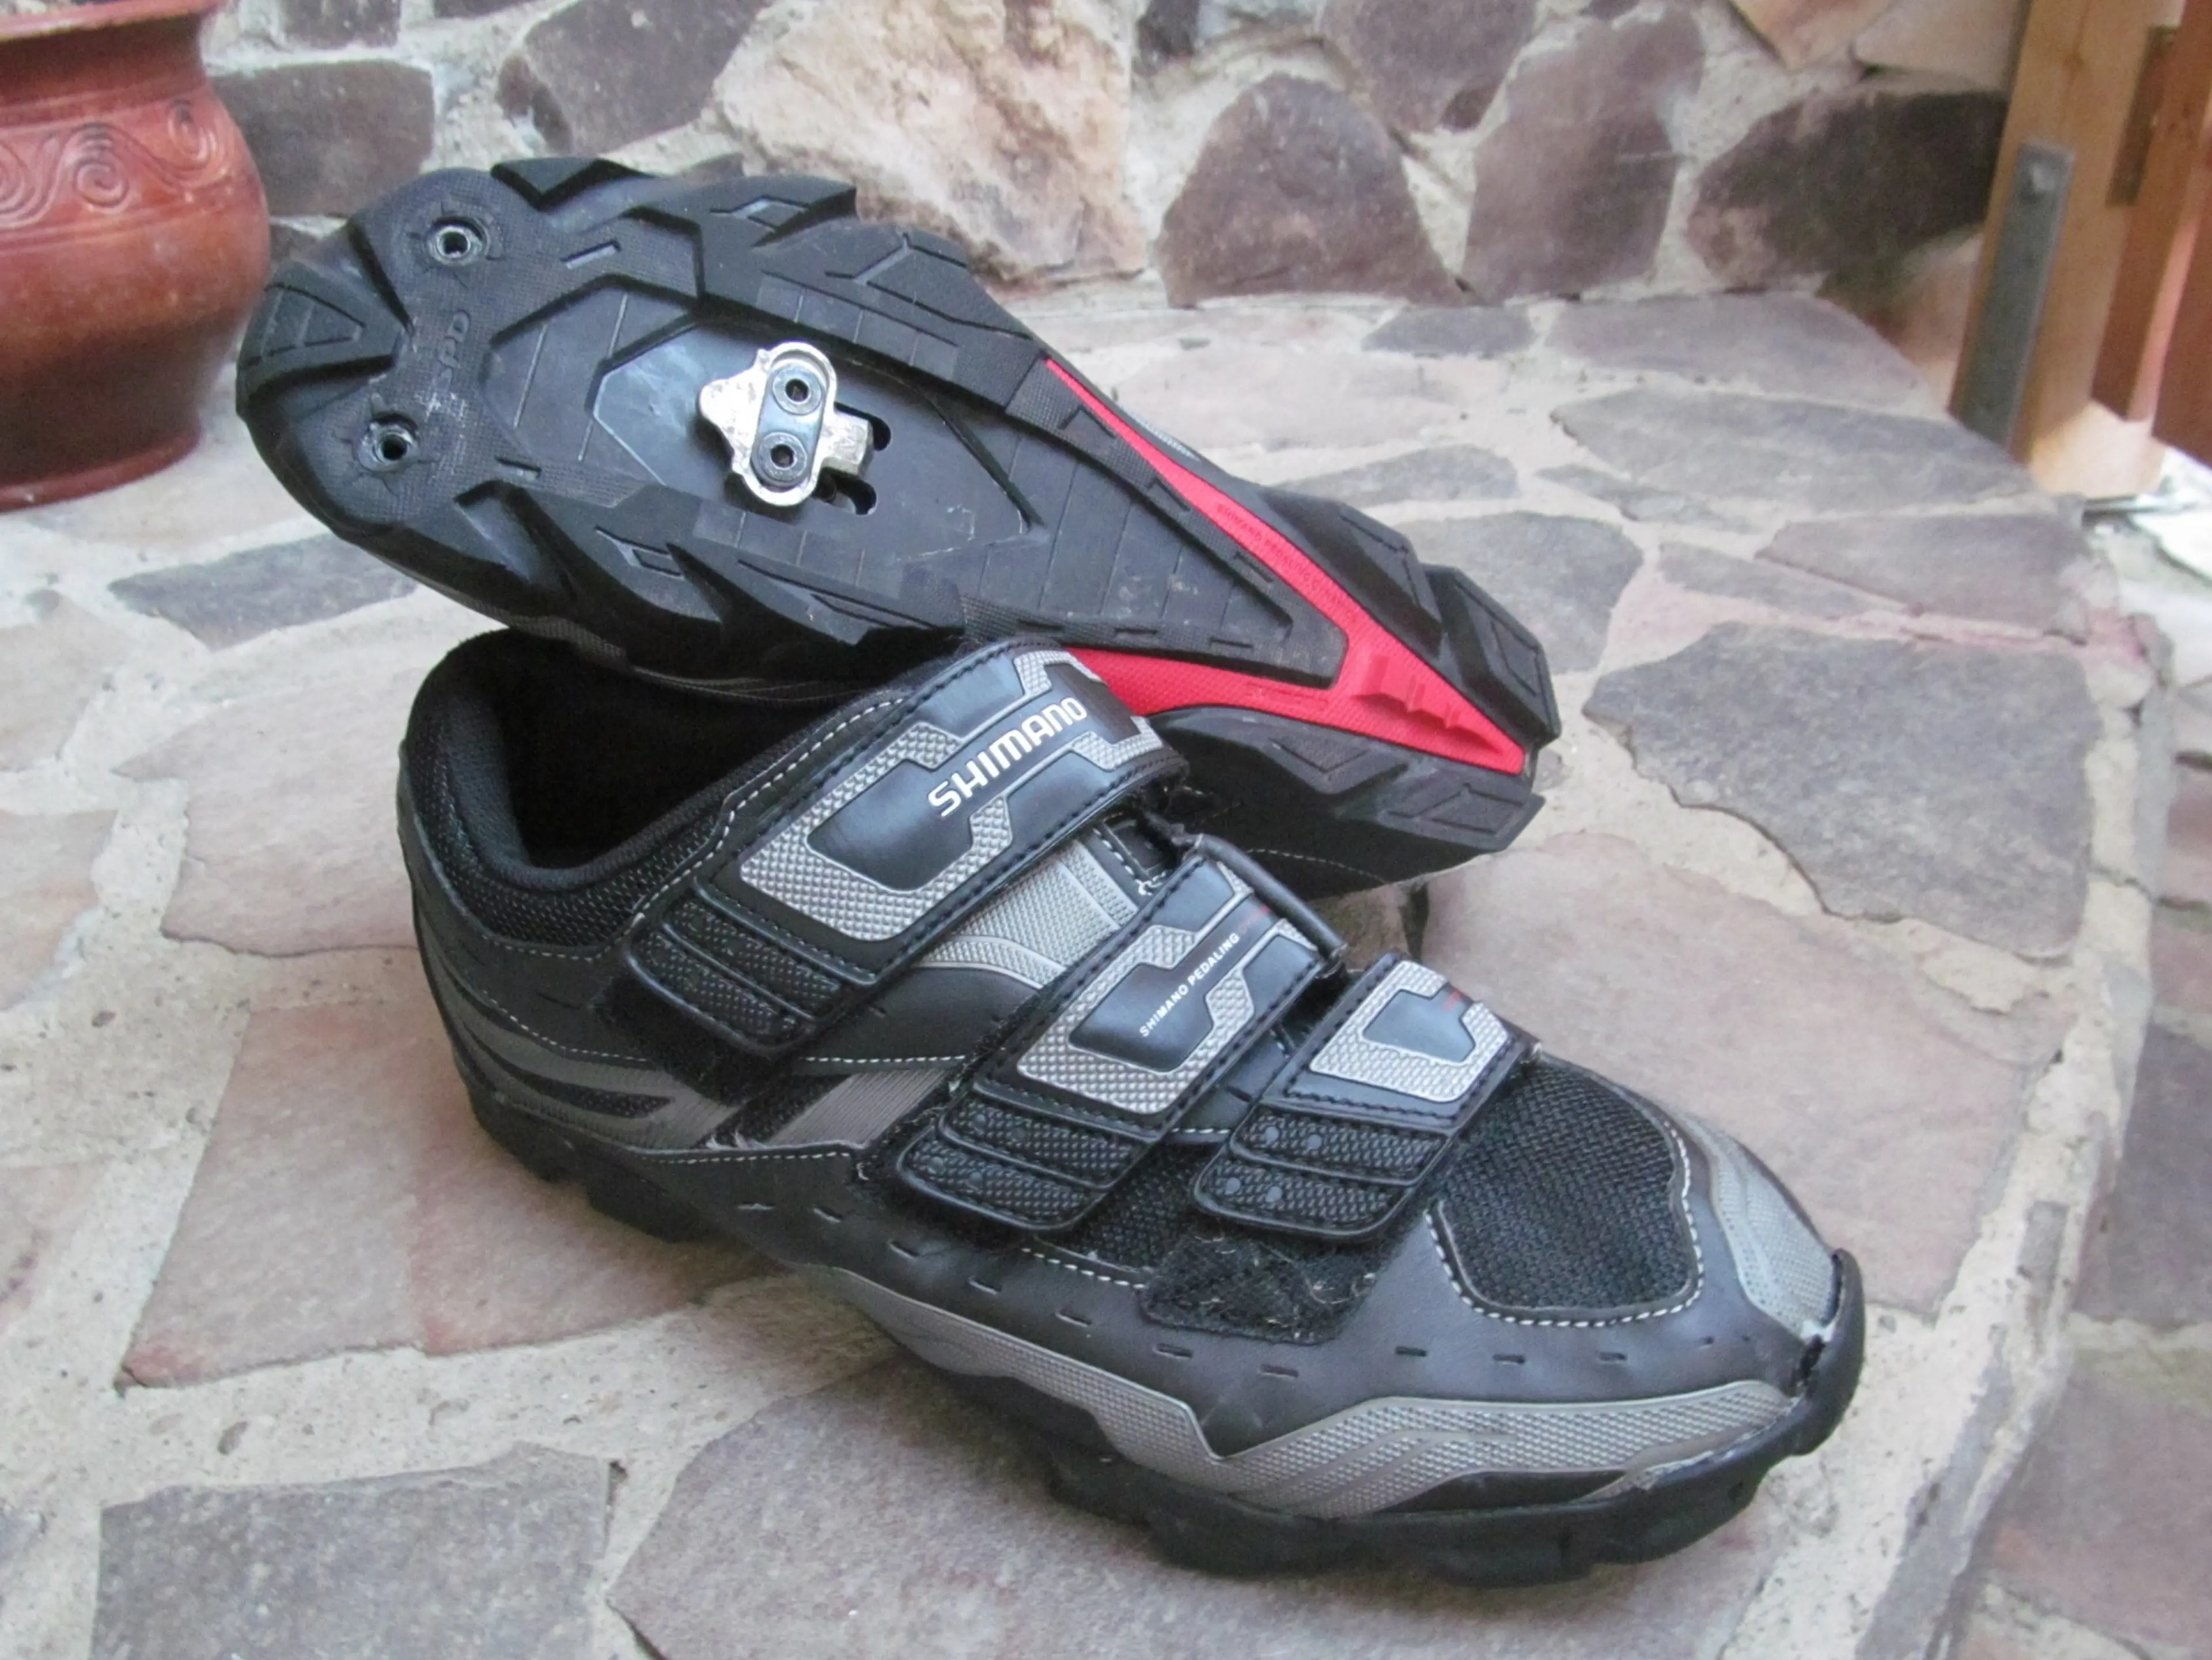 Image Pantofi Shimano SH-M123L nr 45, 28.5 cm